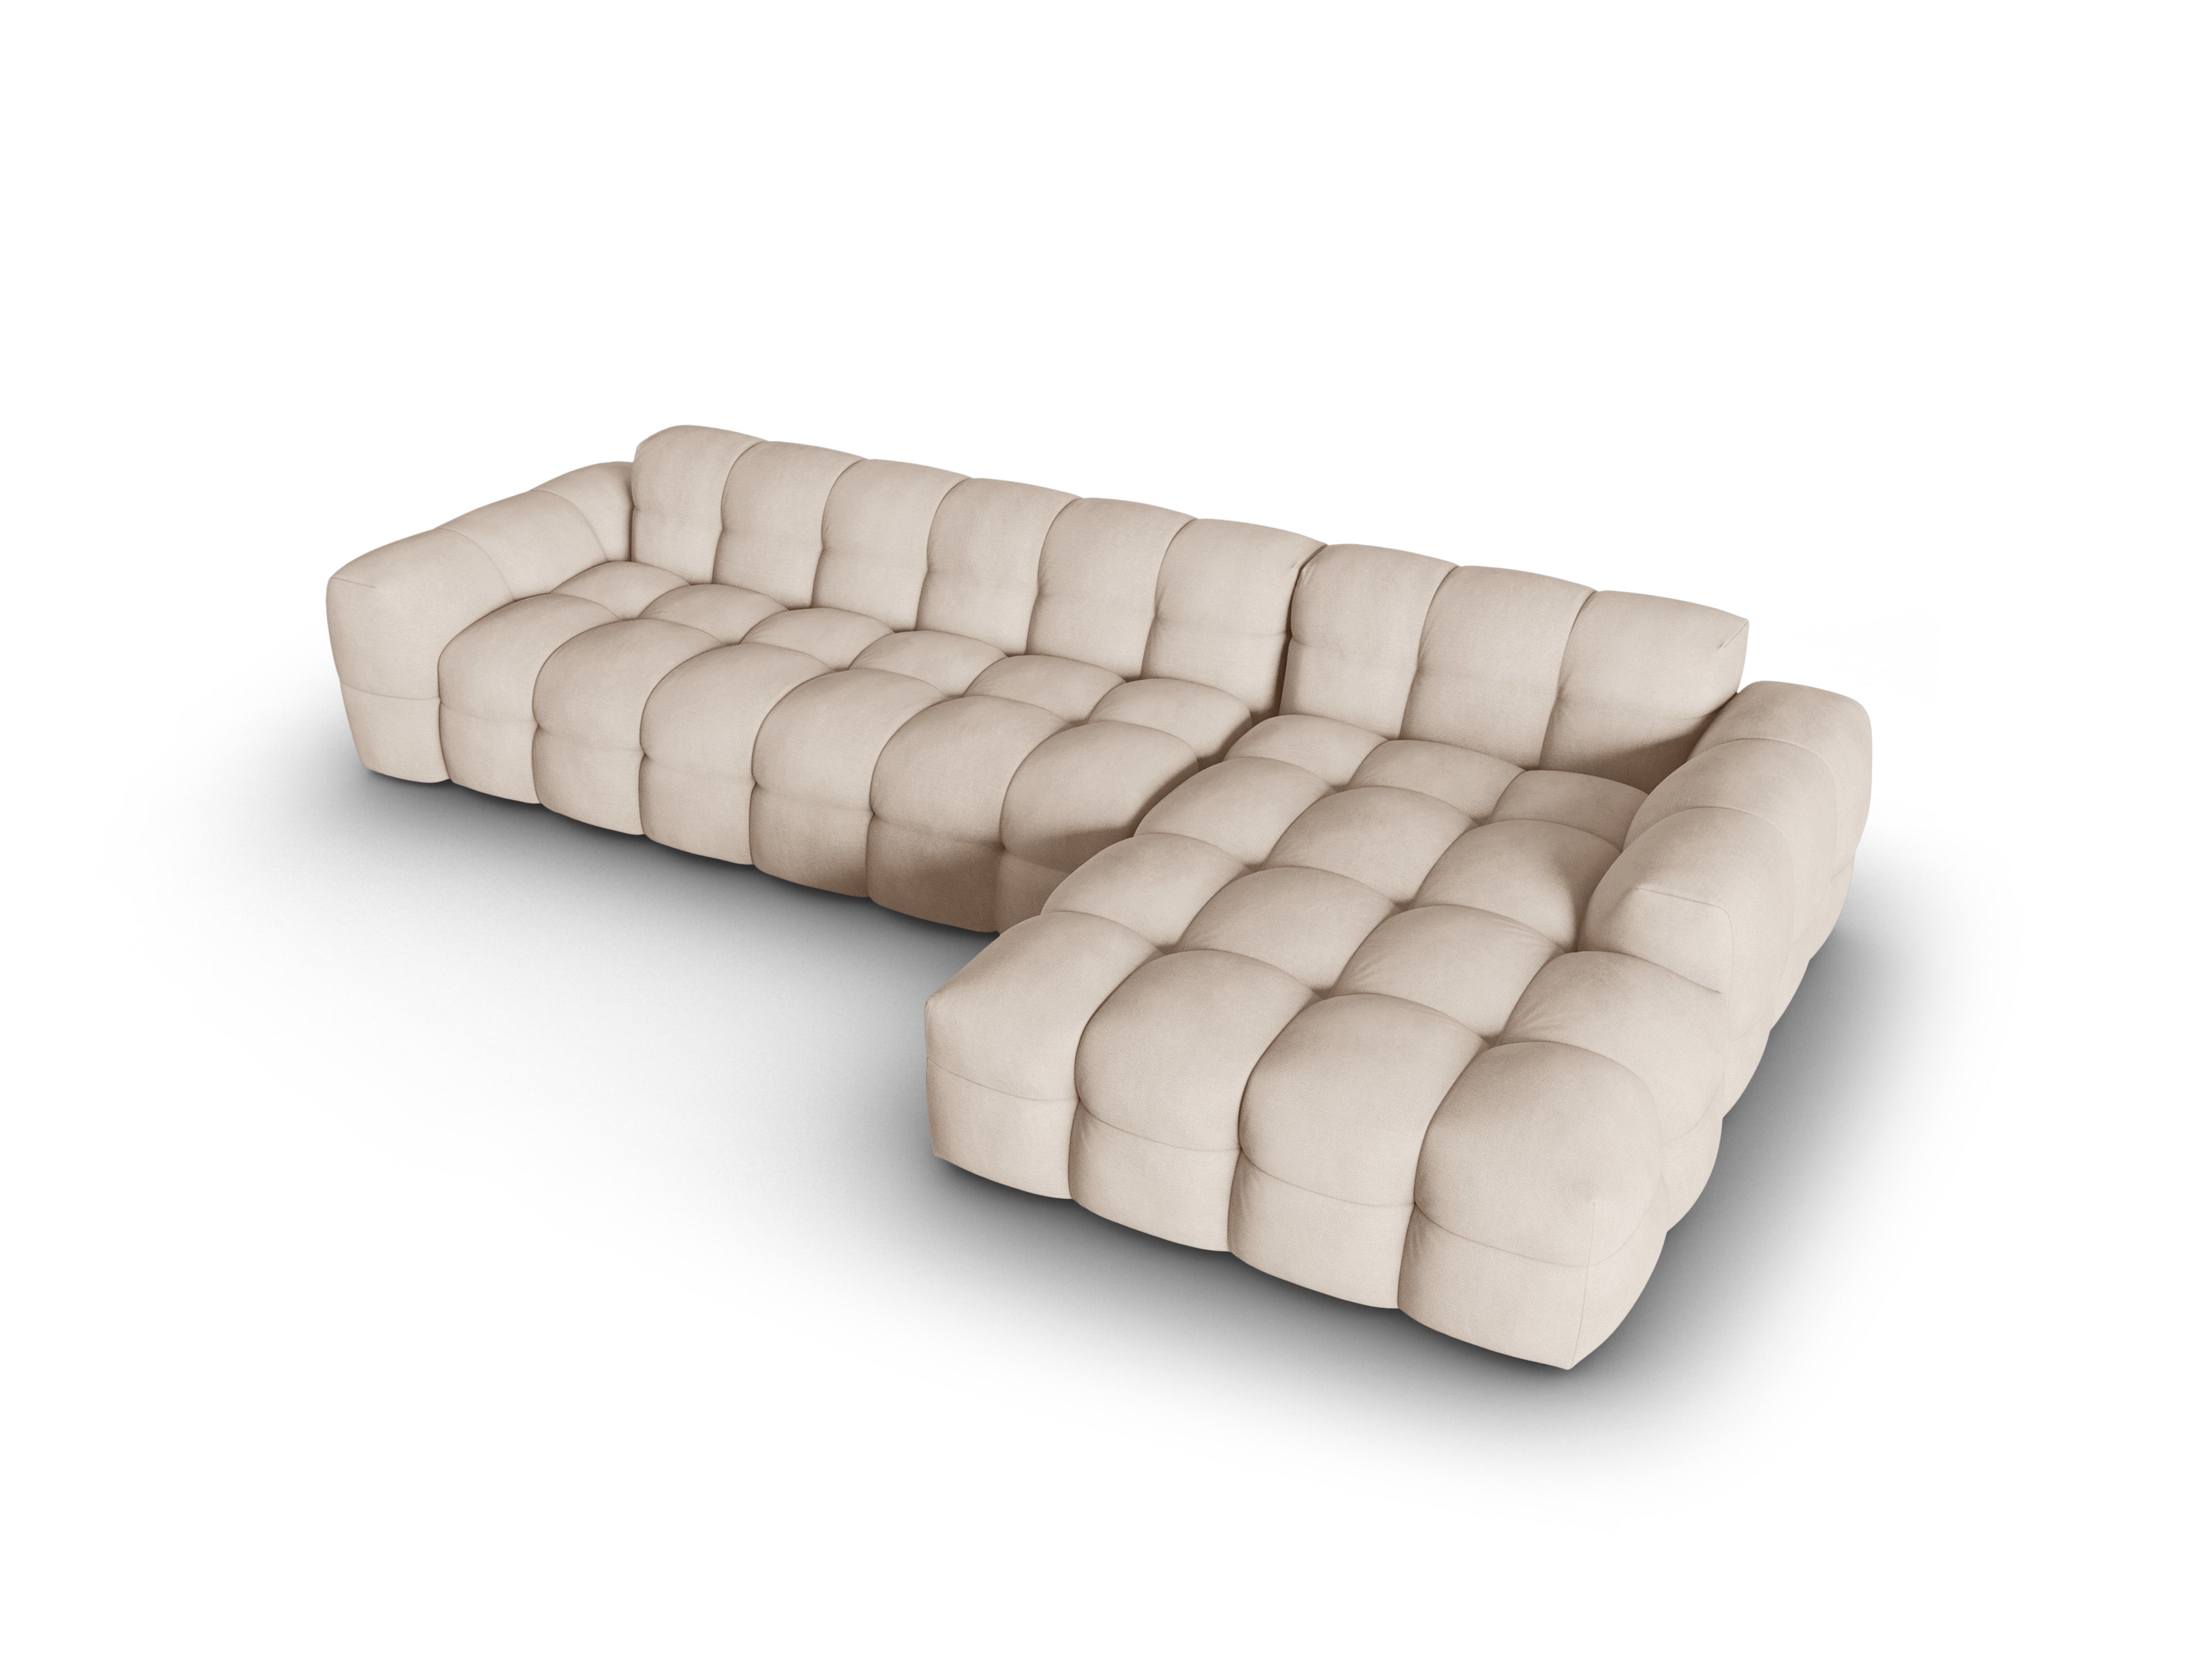 Right Corner Sofa, "Nino", 4 Seats, 320x170x68
Made in Europe, Maison Heritage, Eye on Design